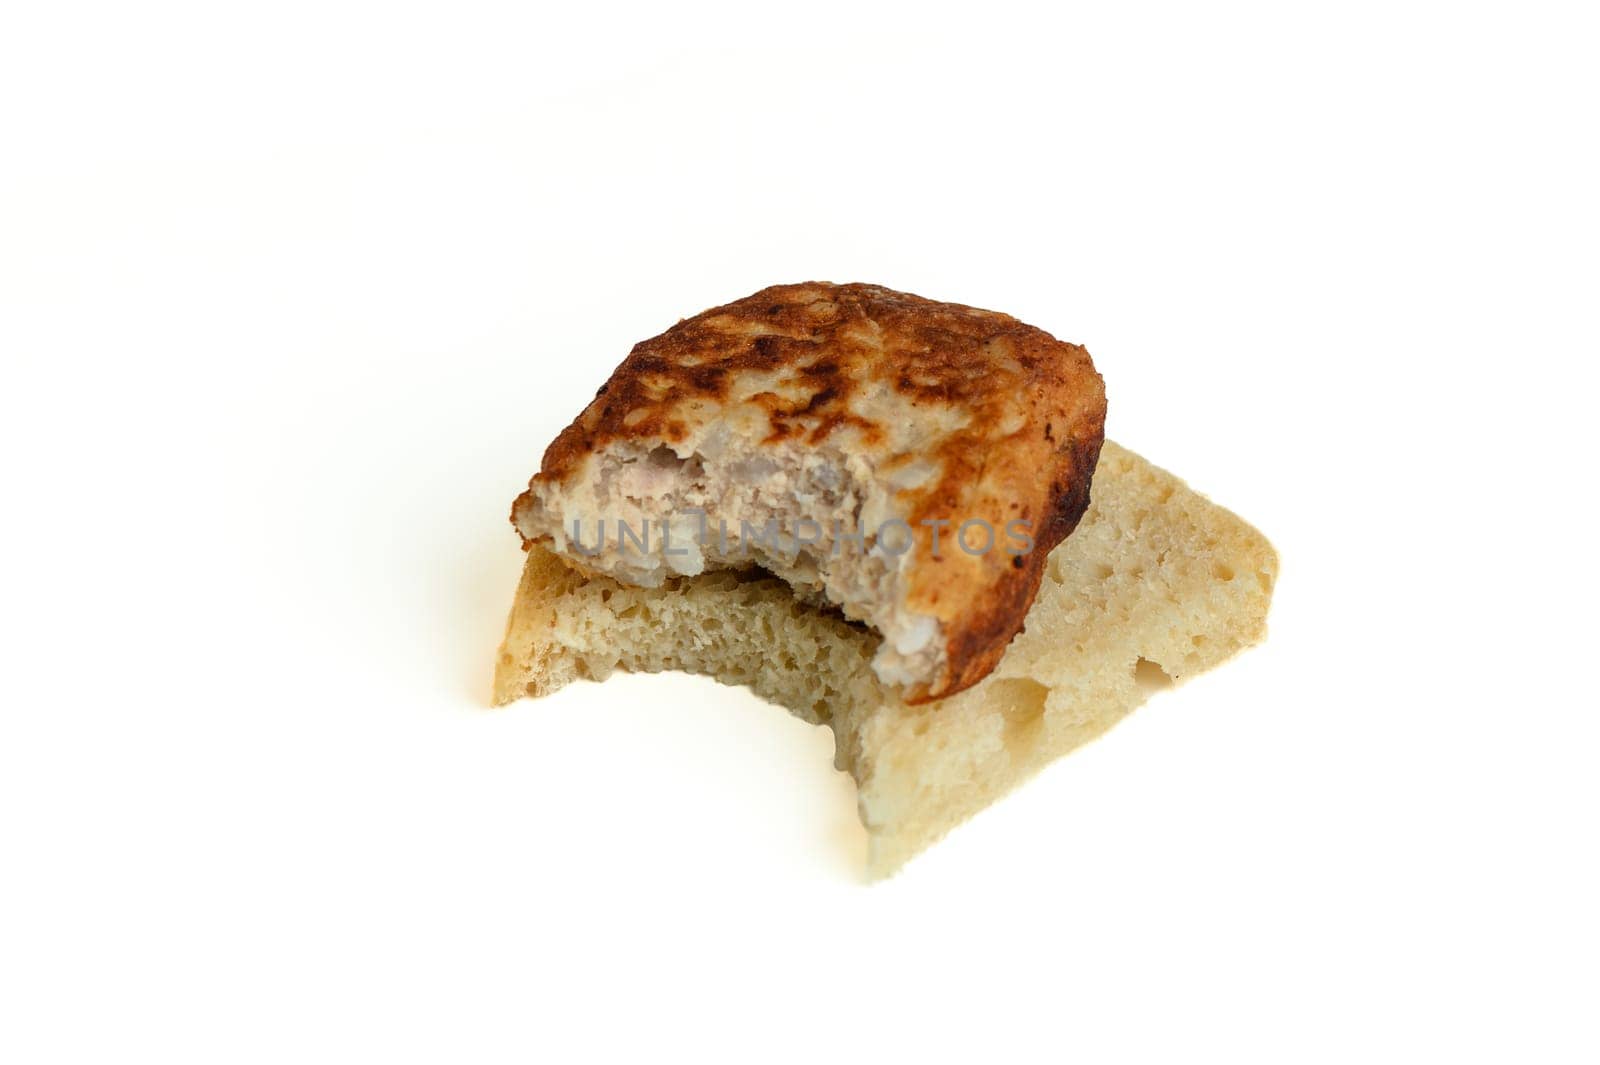 cutlet on a piece of bread, bitten off 1 by Mixa74